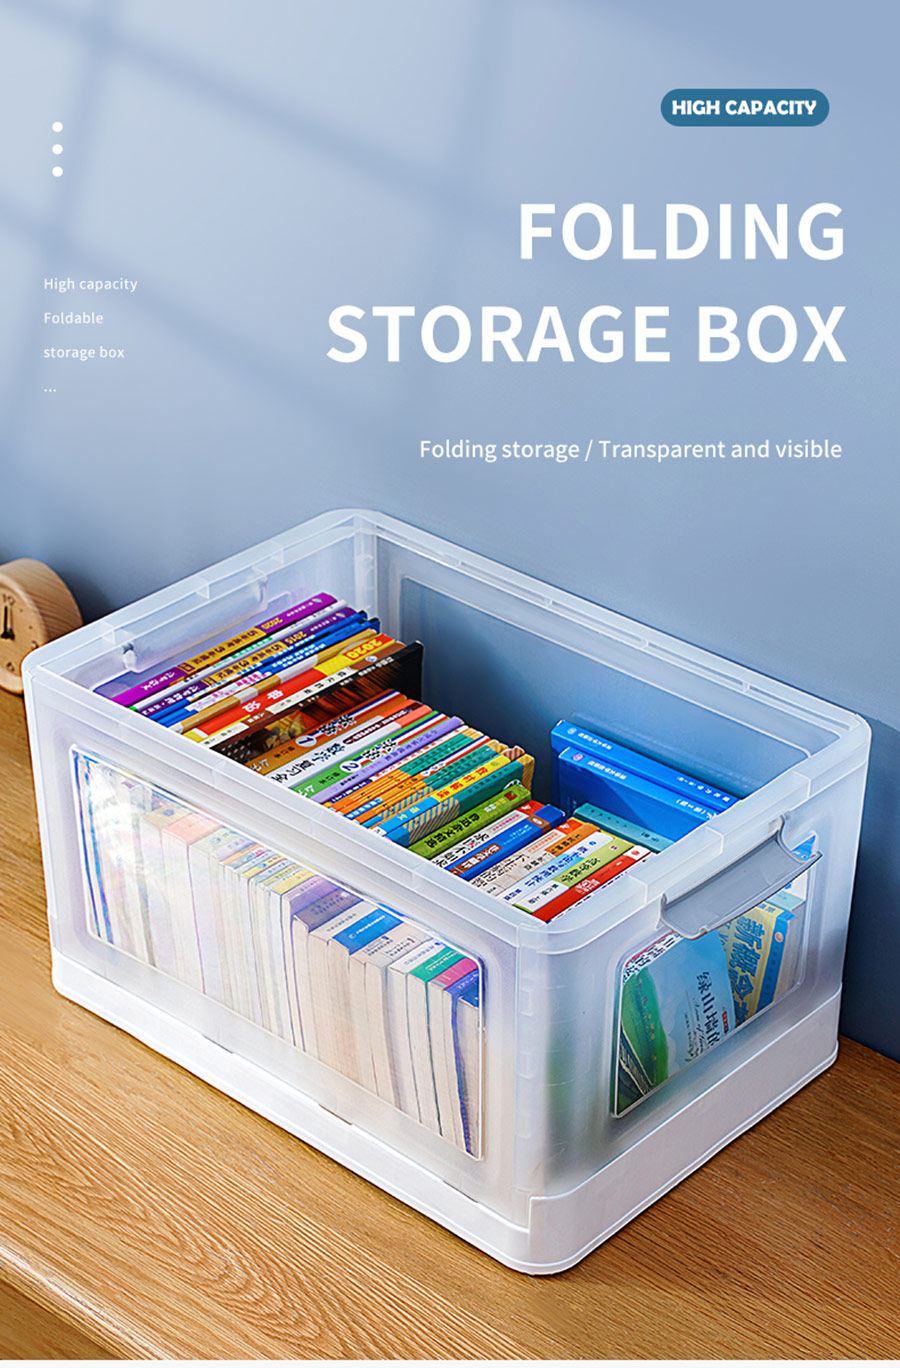 Folding-storage-box-විස්තර-(1)